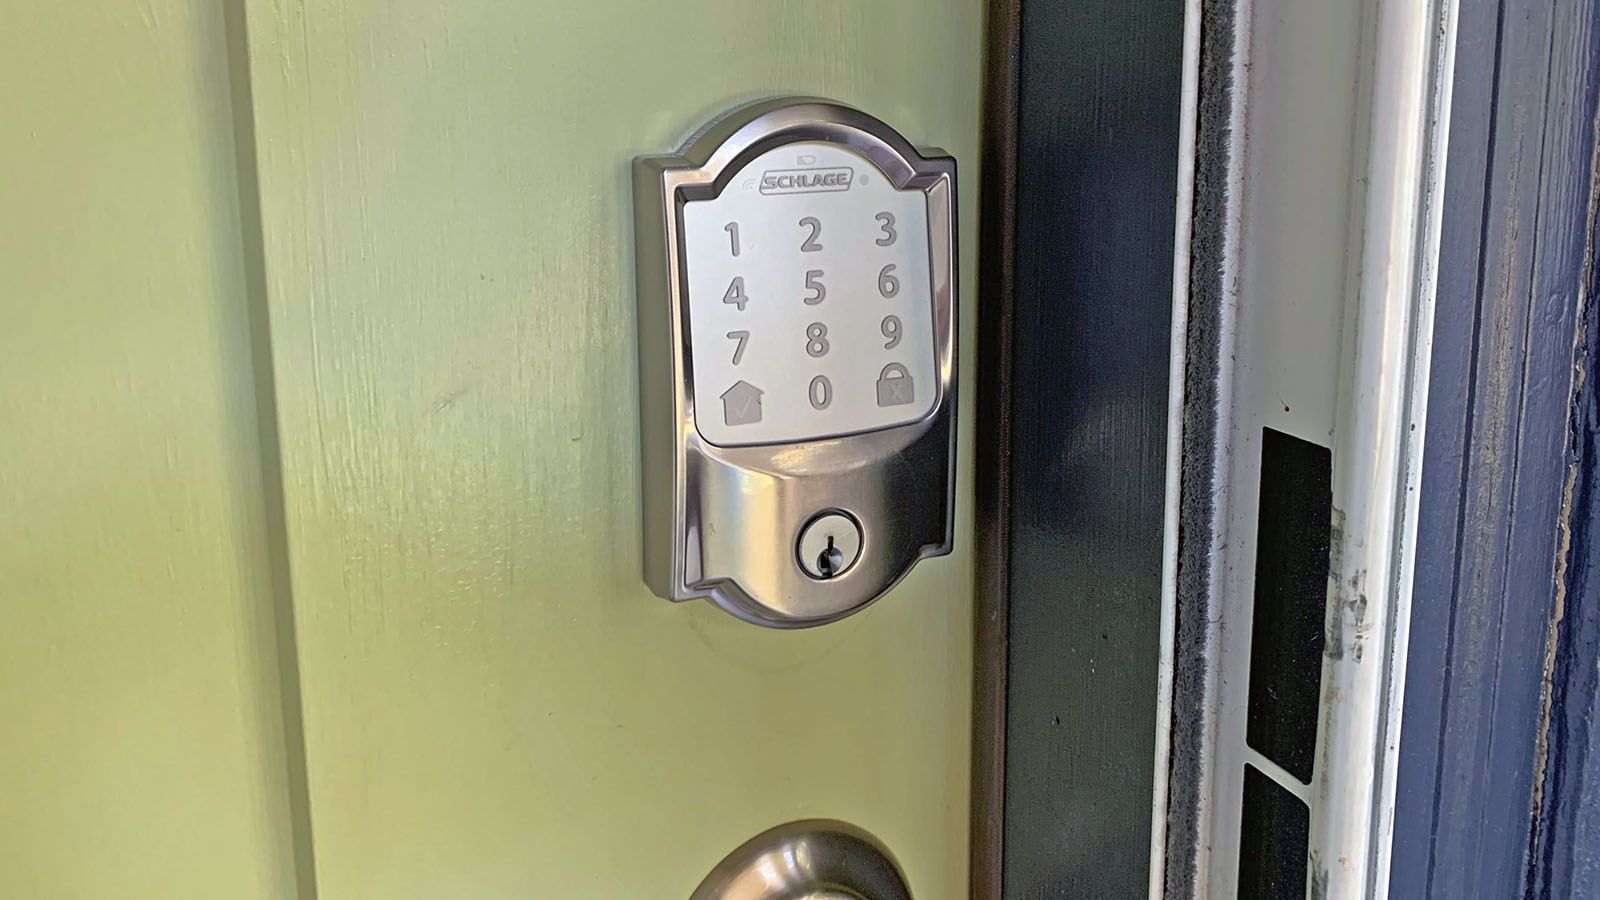 A Schlage Encode lock on a green door